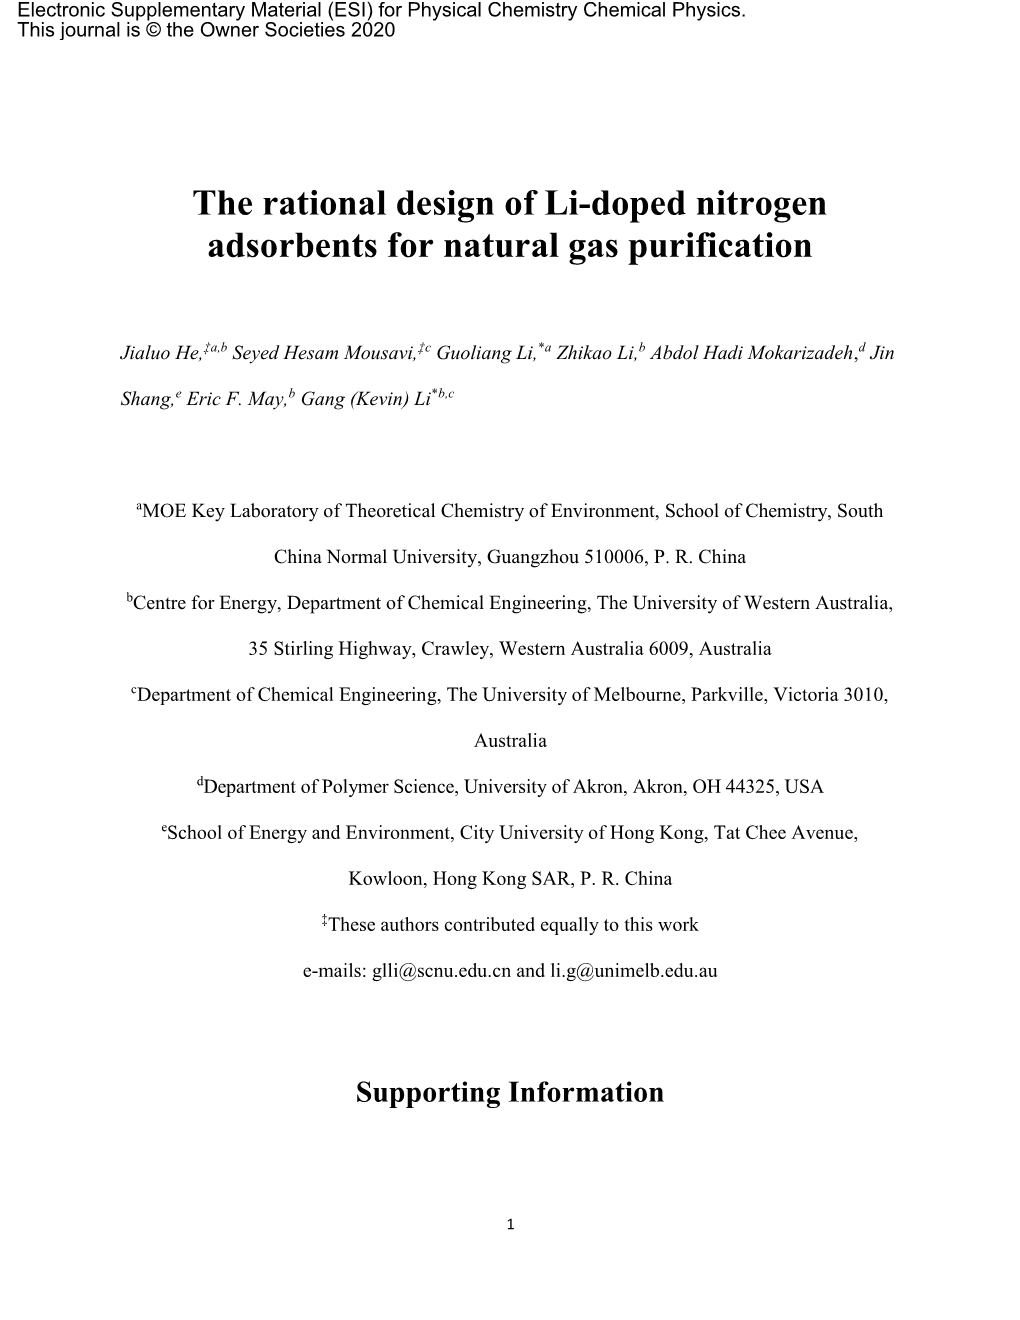 The Rational Design of Li-Doped Nitrogen Adsorbents for Natural Gas Purification